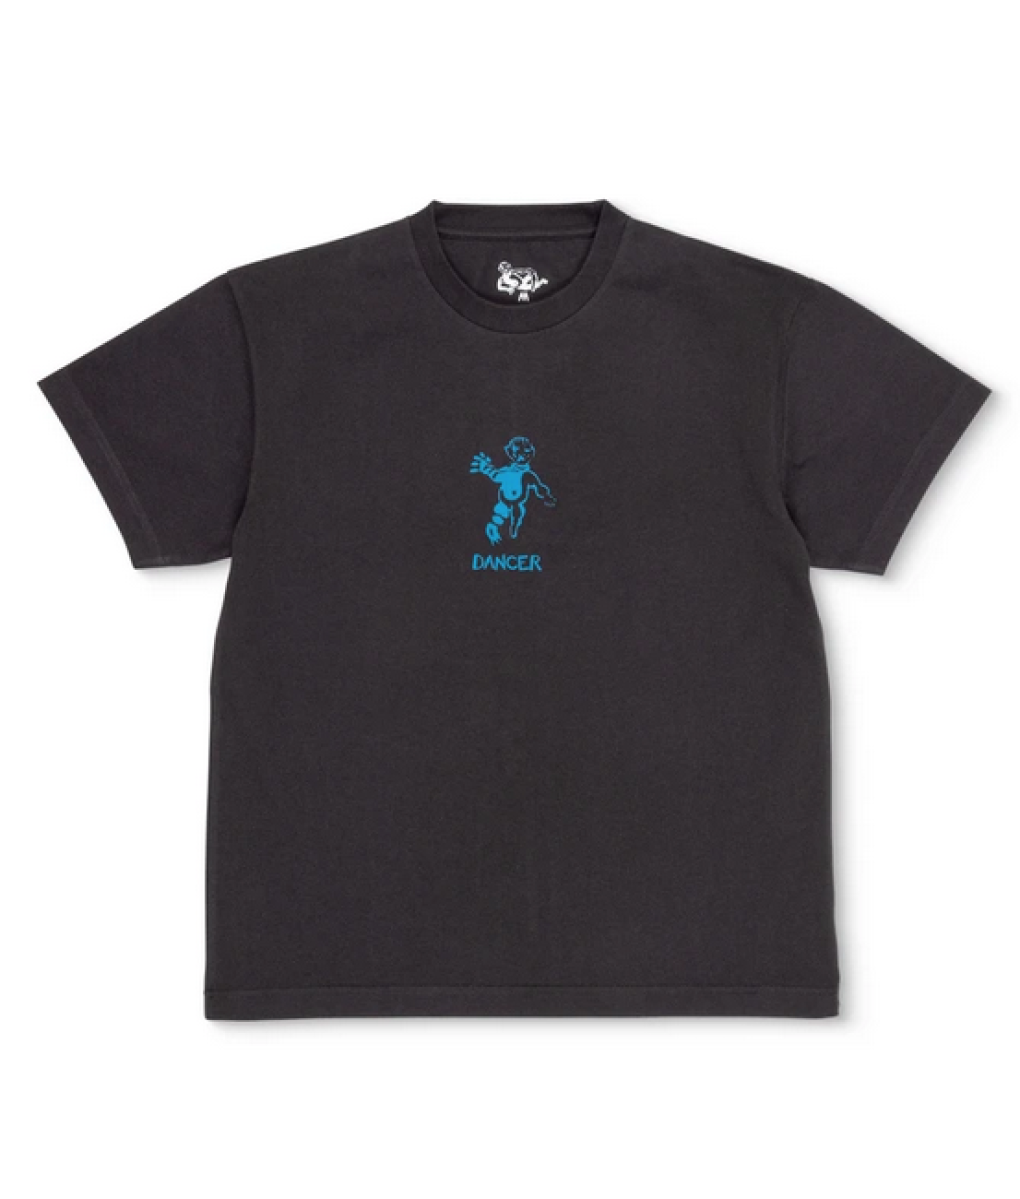 Sidewalk Skateshop - T-shirts - Dancer - OG Logo